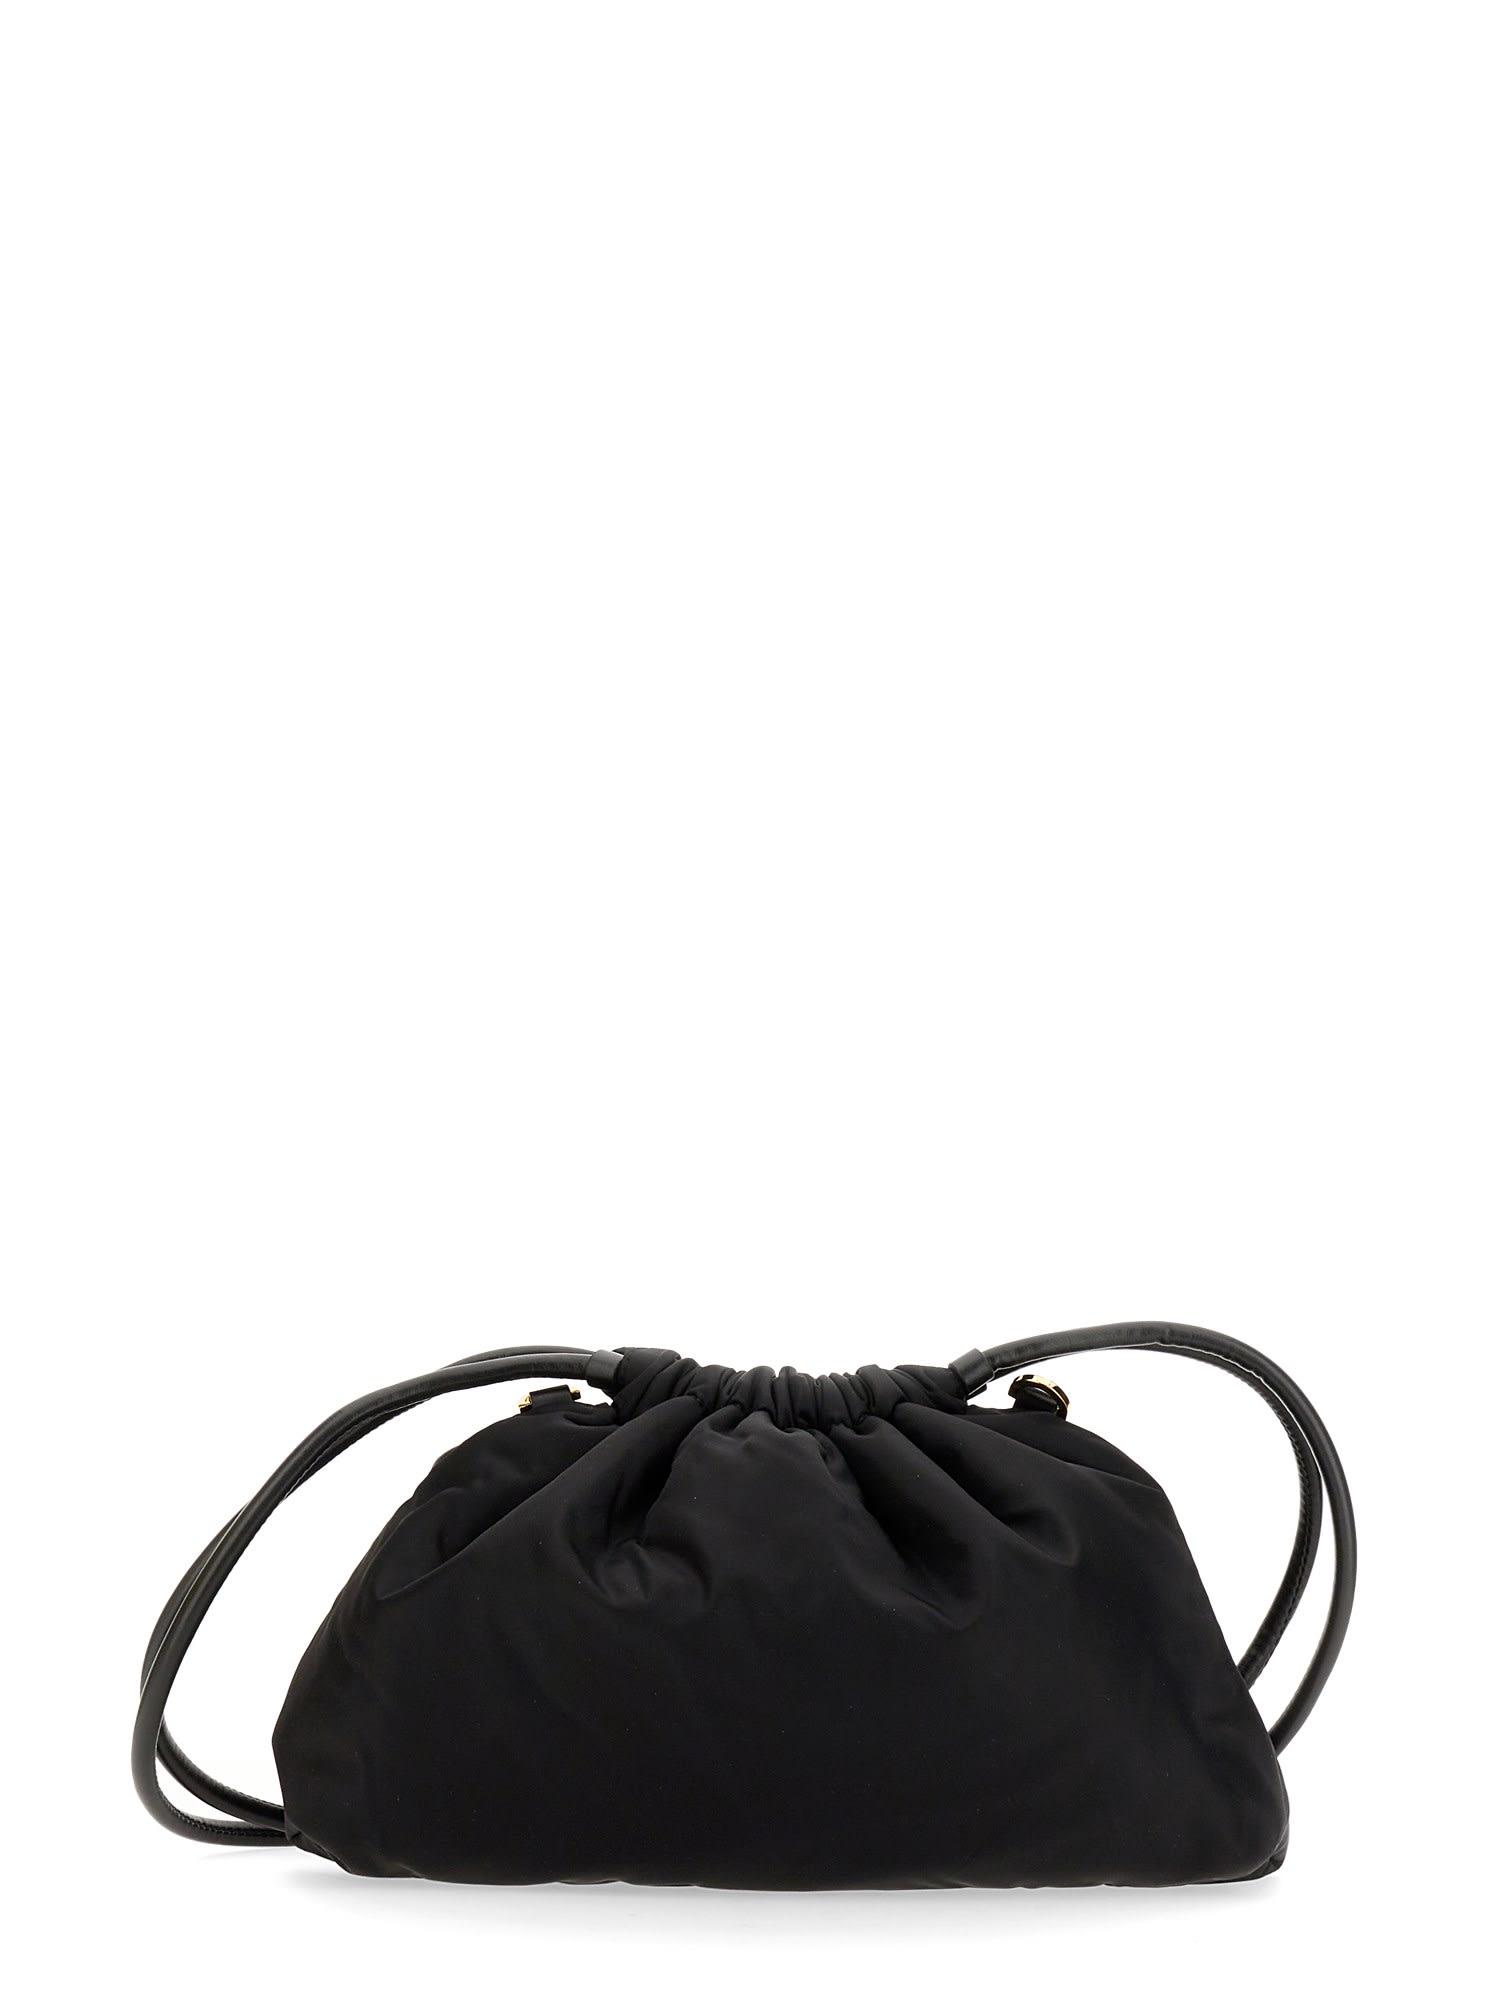 Black Womens Shoulder bags N°21 Shoulder bags - Save 22% N°21 Synthetic Eva Shoulder Bag in Nero 